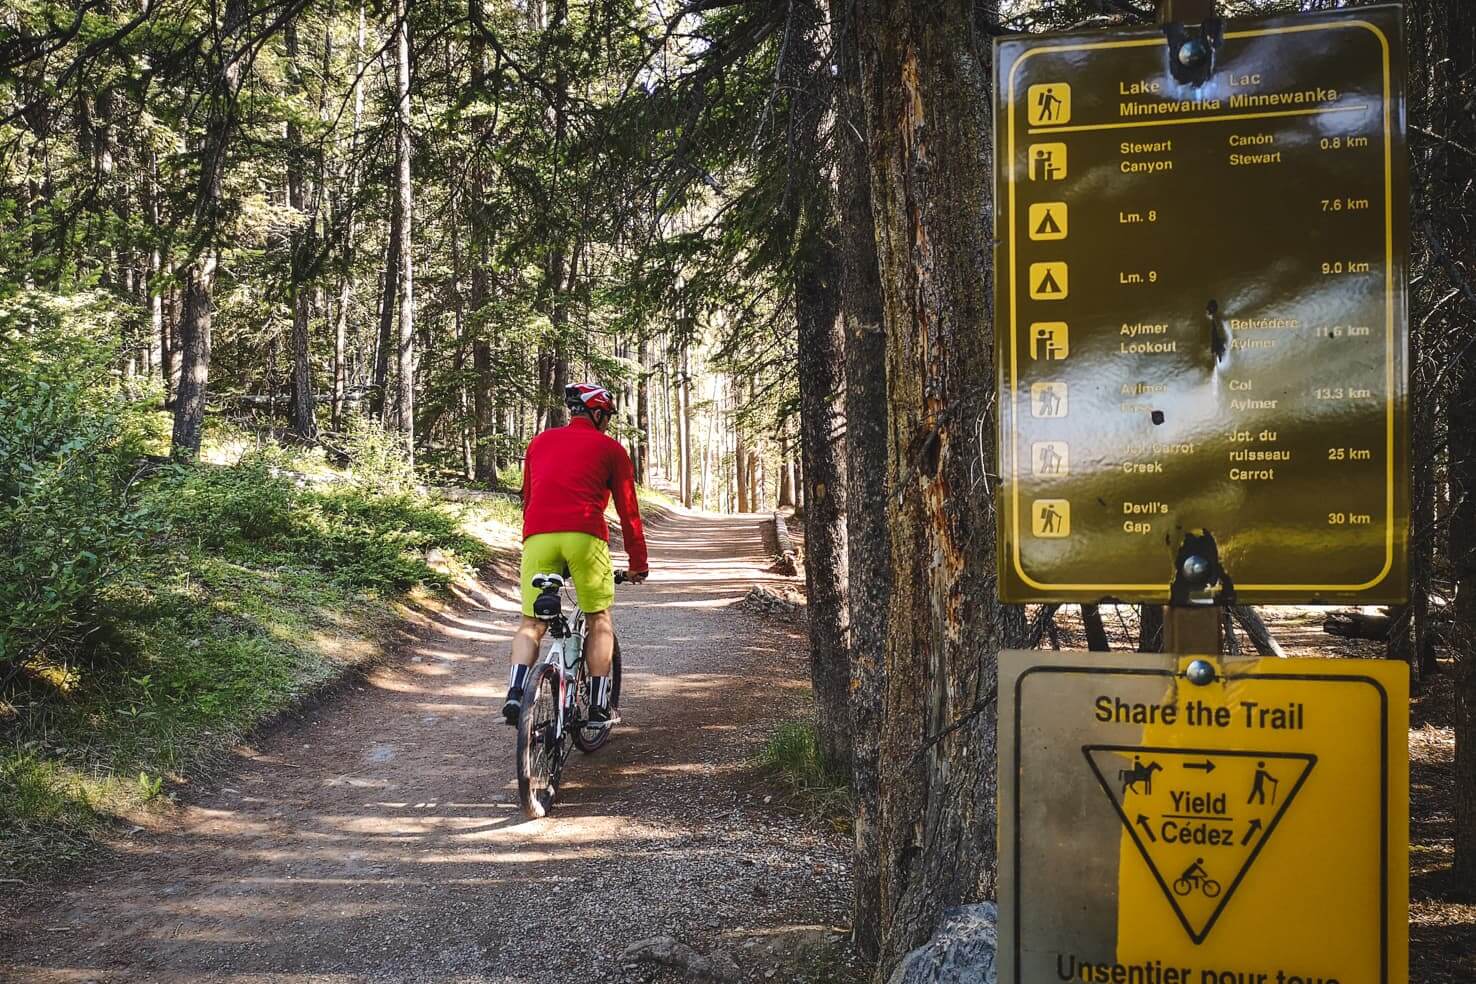 Aylmer Lookout Hike & Bike Trip, Banff National Park